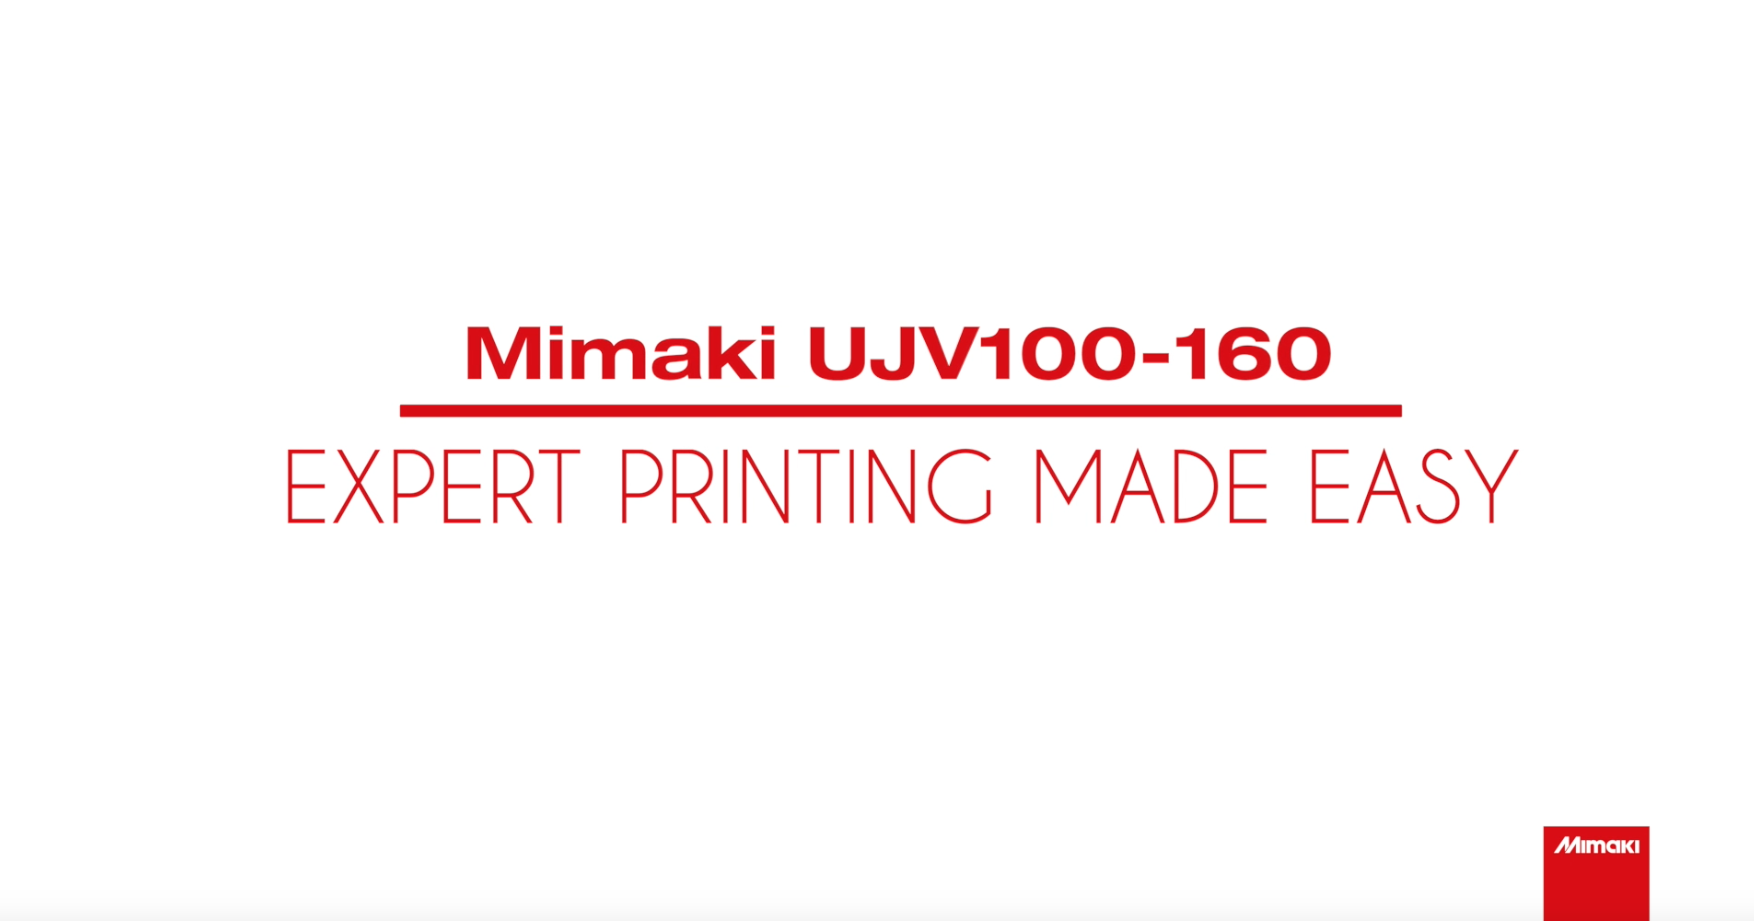 Mimaki UJV100-160 - Expert Printing Made Easy